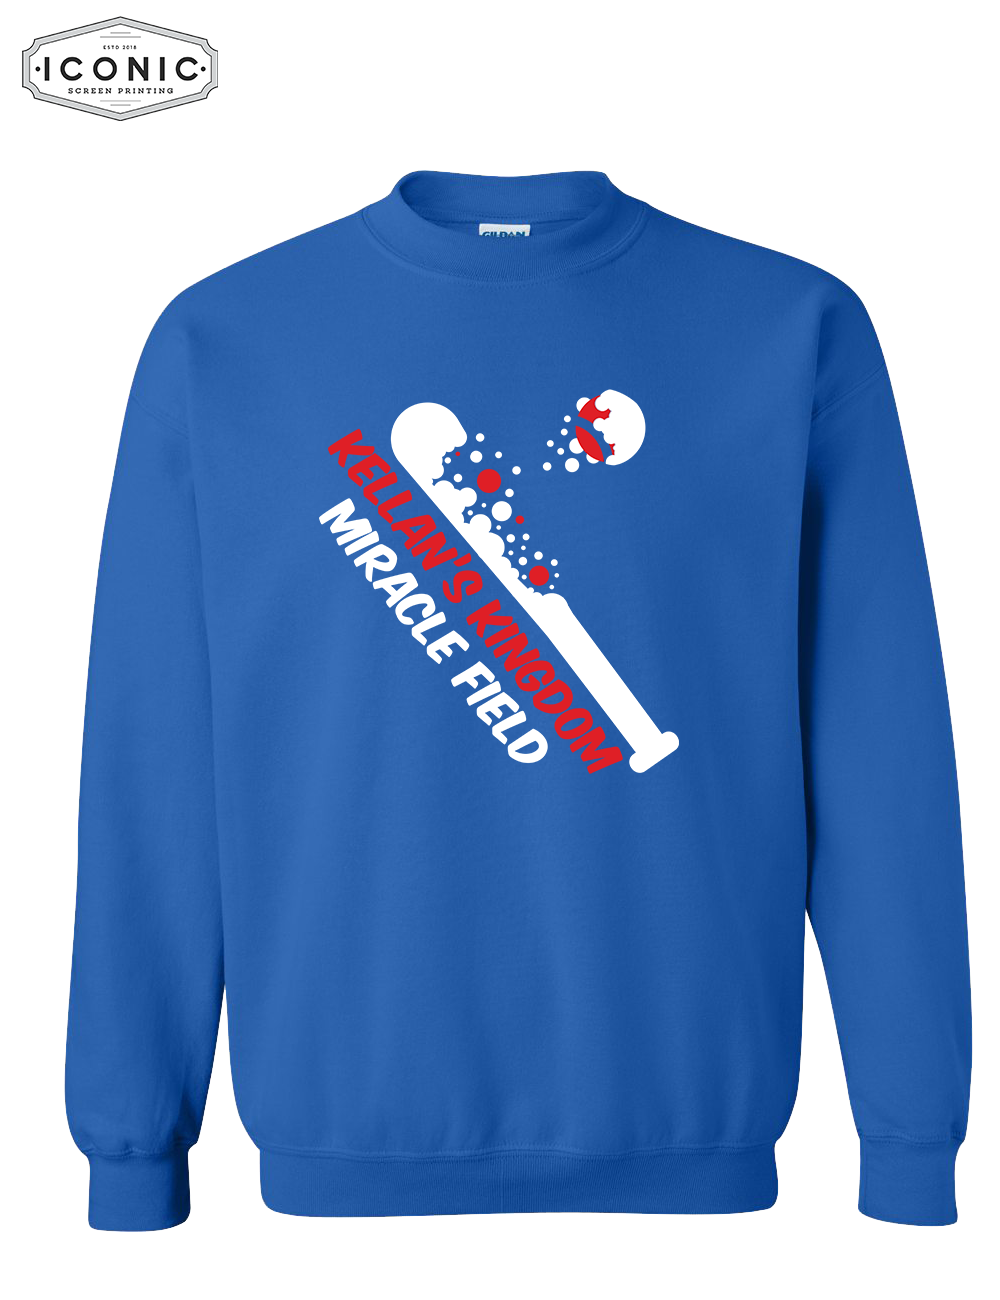 Baseball Bat - Heavy Blend Sweatshirt